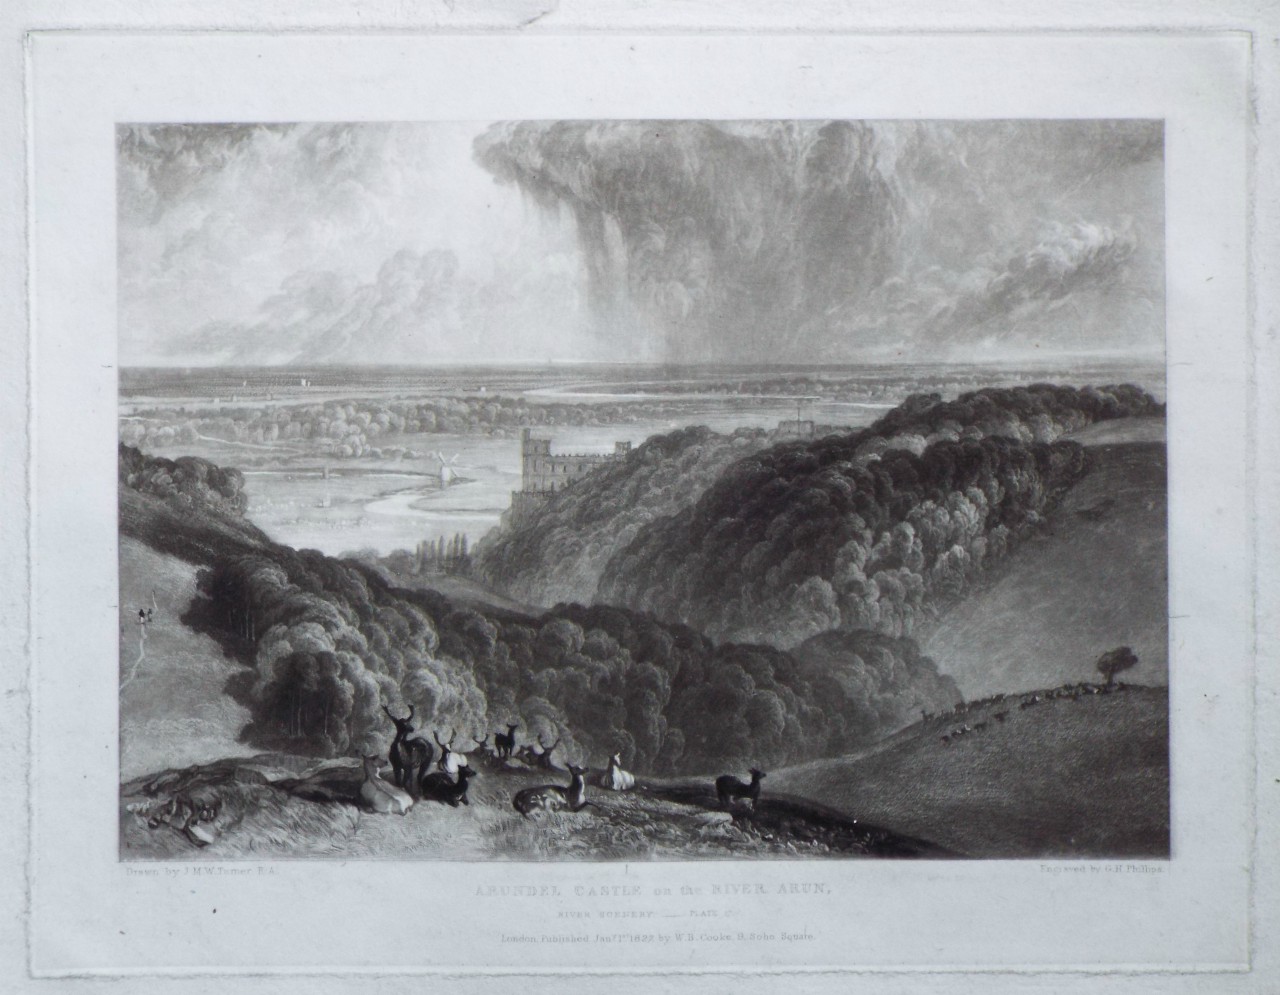 Mezzotint - Arundel Castle on the River Arun, River Scenery - Plate 17 - Phillips